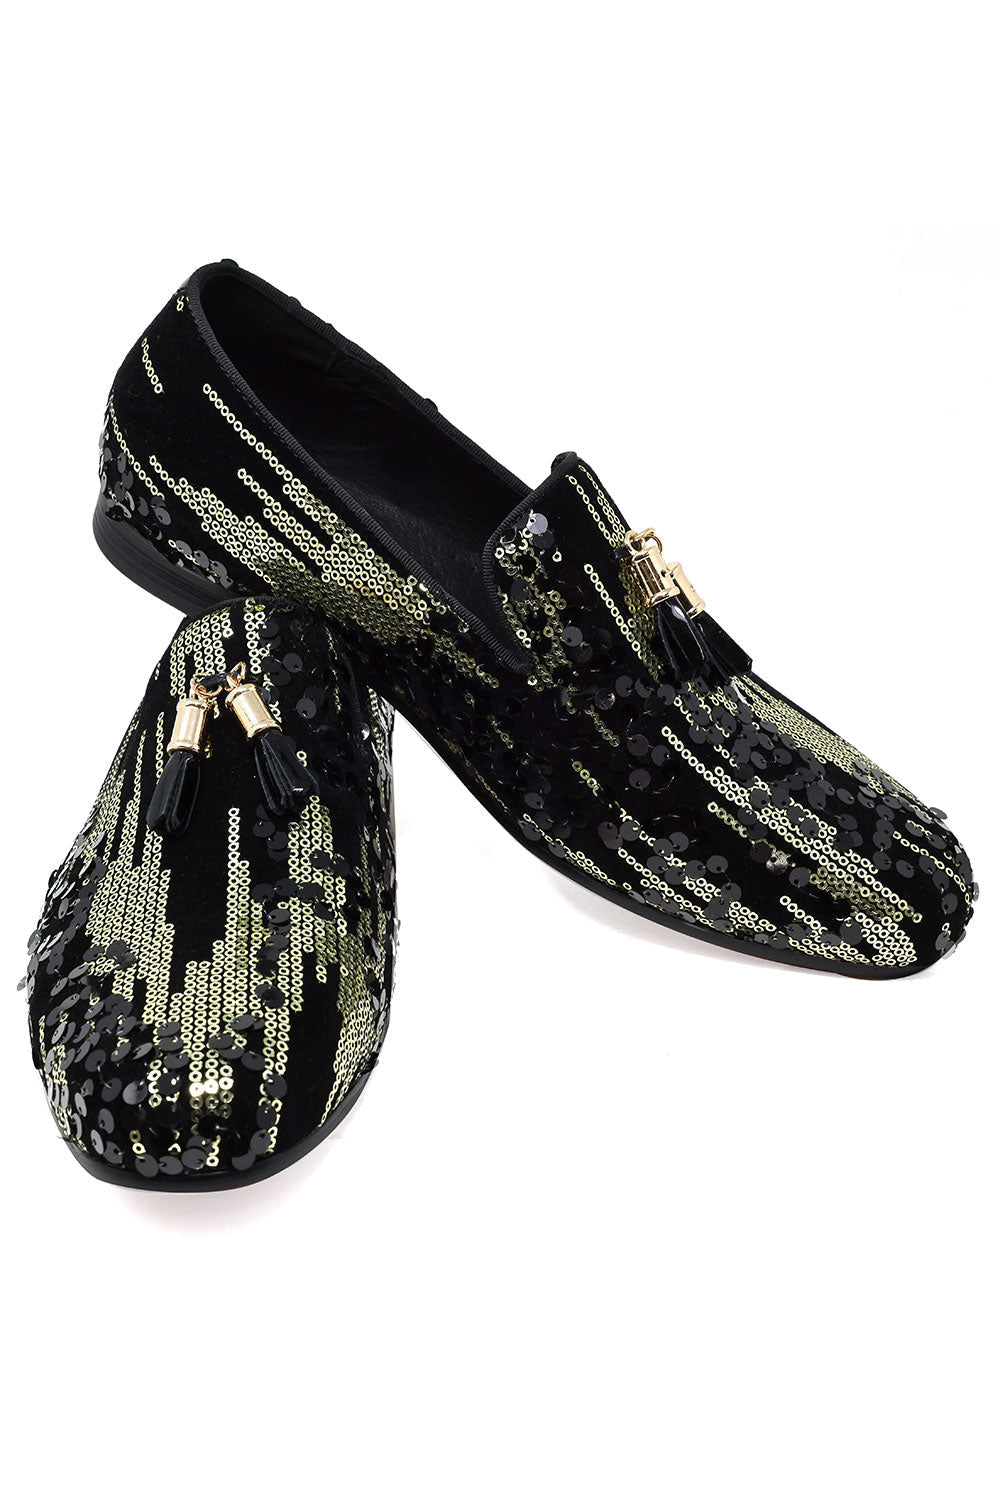 BARABAS Men's Rhinestone Sequin key Pattern Slip On Dress Shoes SH3073 Black and Gold